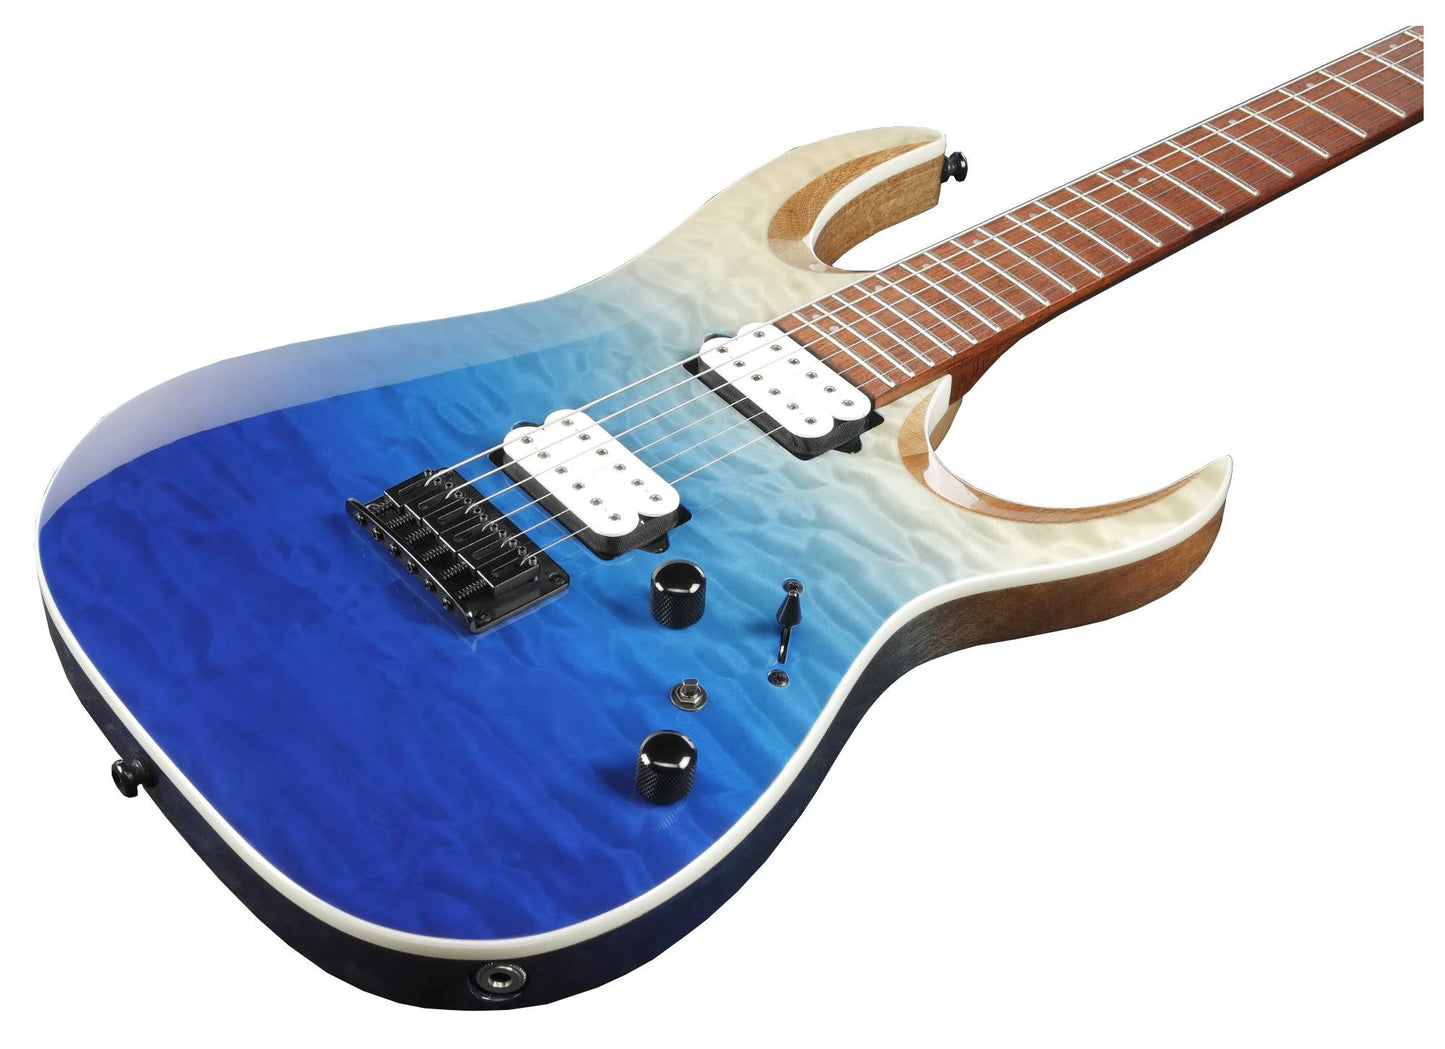 Ibanez High Performance RGA42HPTQM electric guitar in Blue Iceberg Gradation